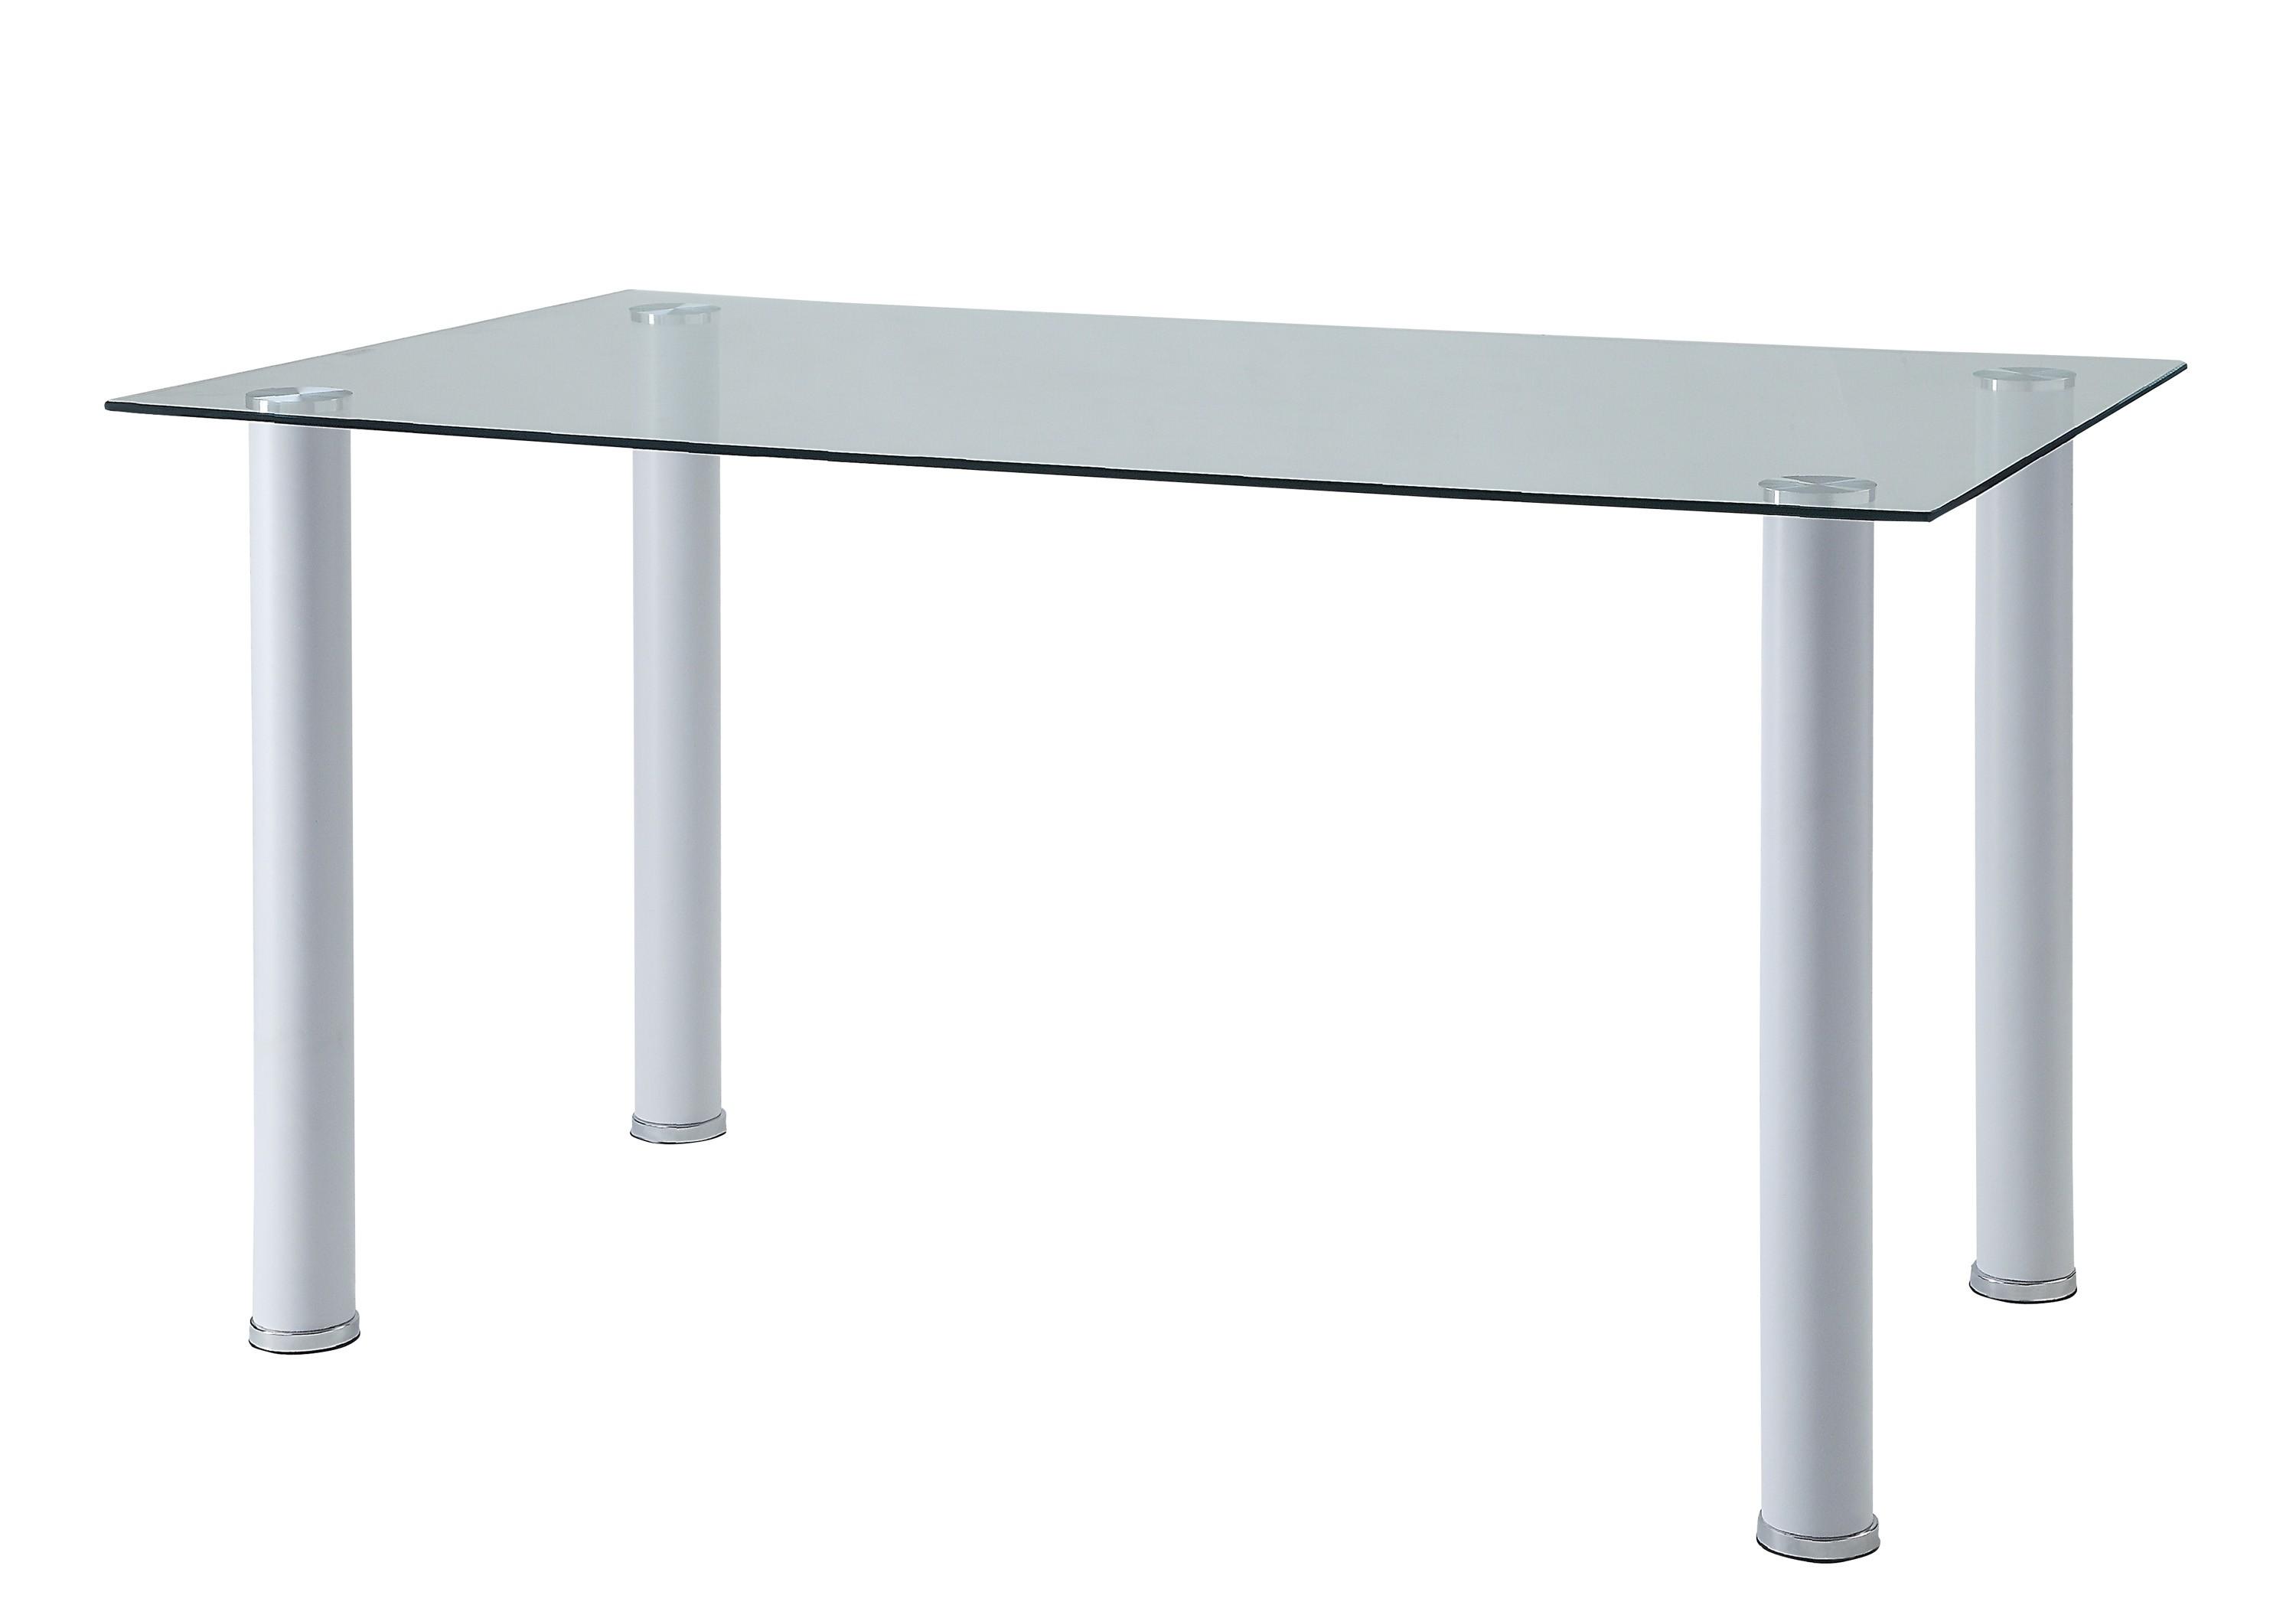 

    
Contemporary White Metal & Glass Dining Room Set 7pcs Homelegance 5538W* Florian
